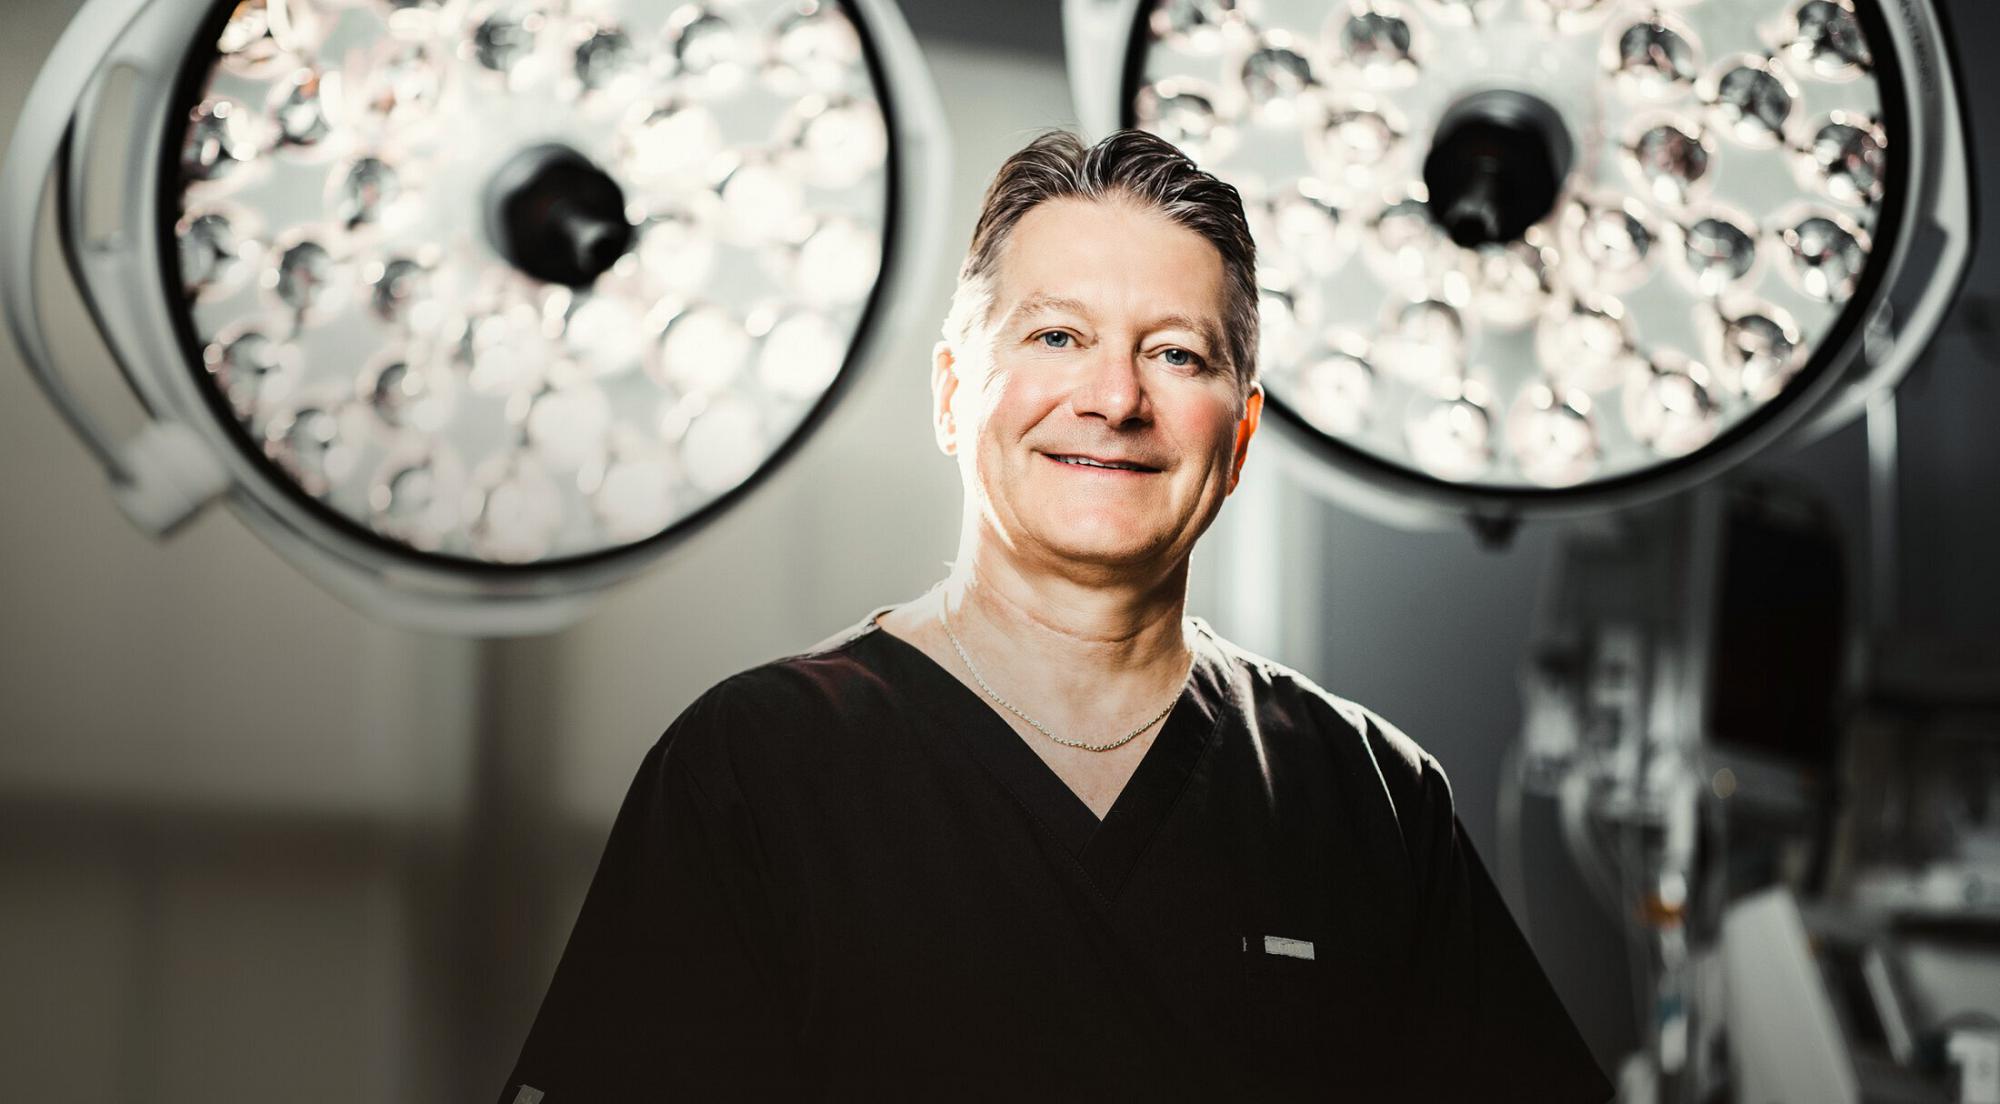 Austin male breast reduction surgeon Dr. Caridi